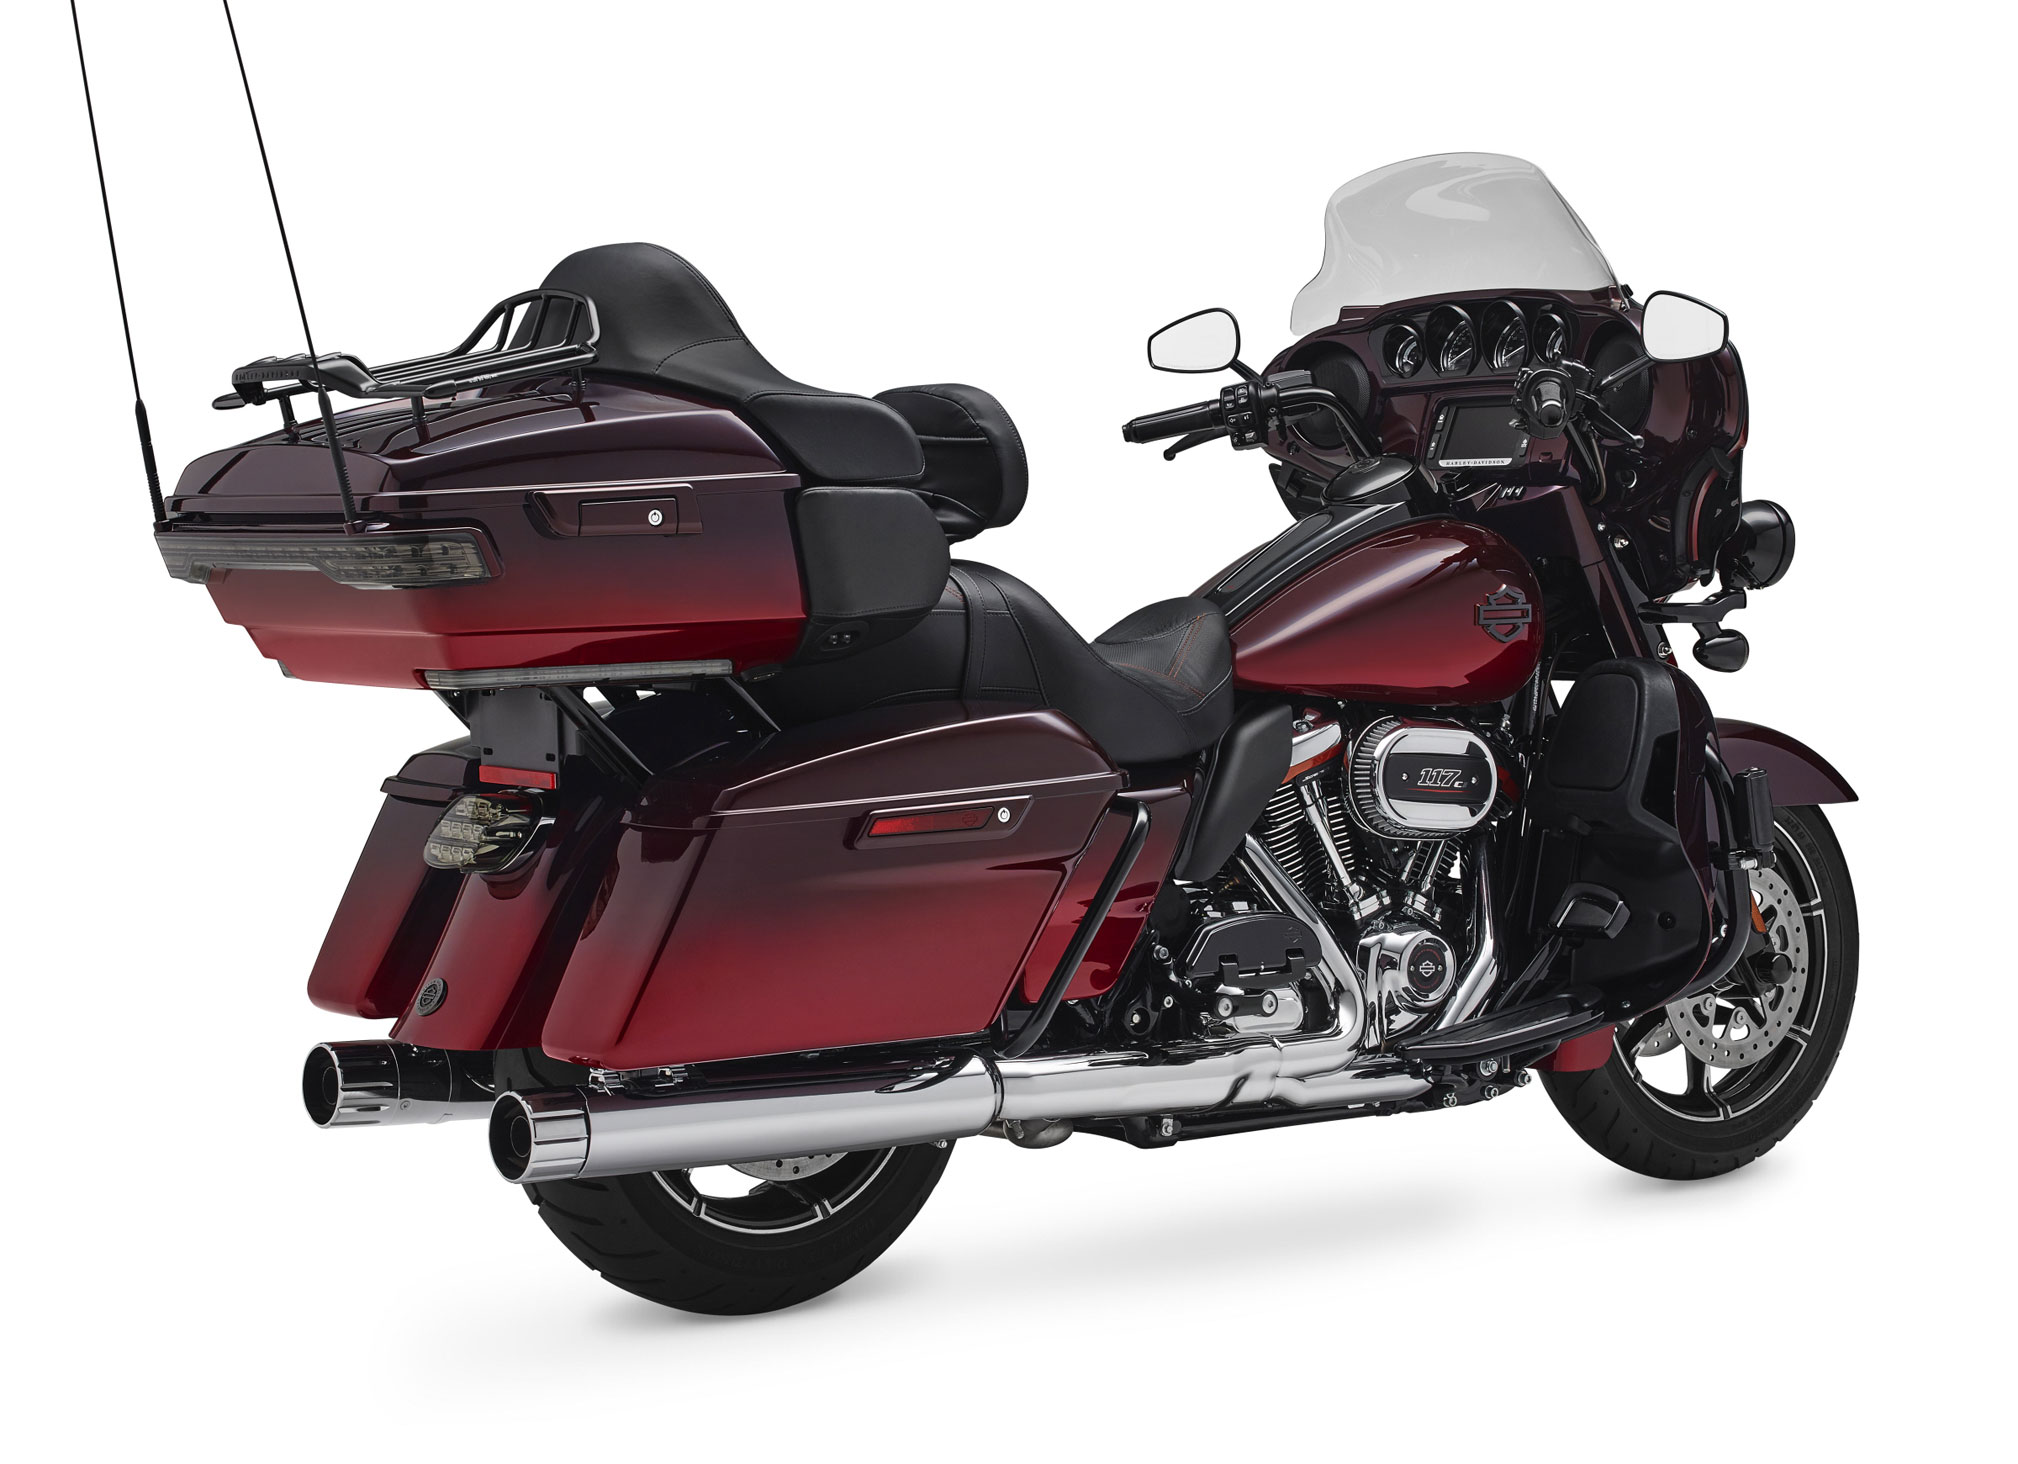 Harley Davidson Limited Edition Cvo 2020 Price Promotion Off58